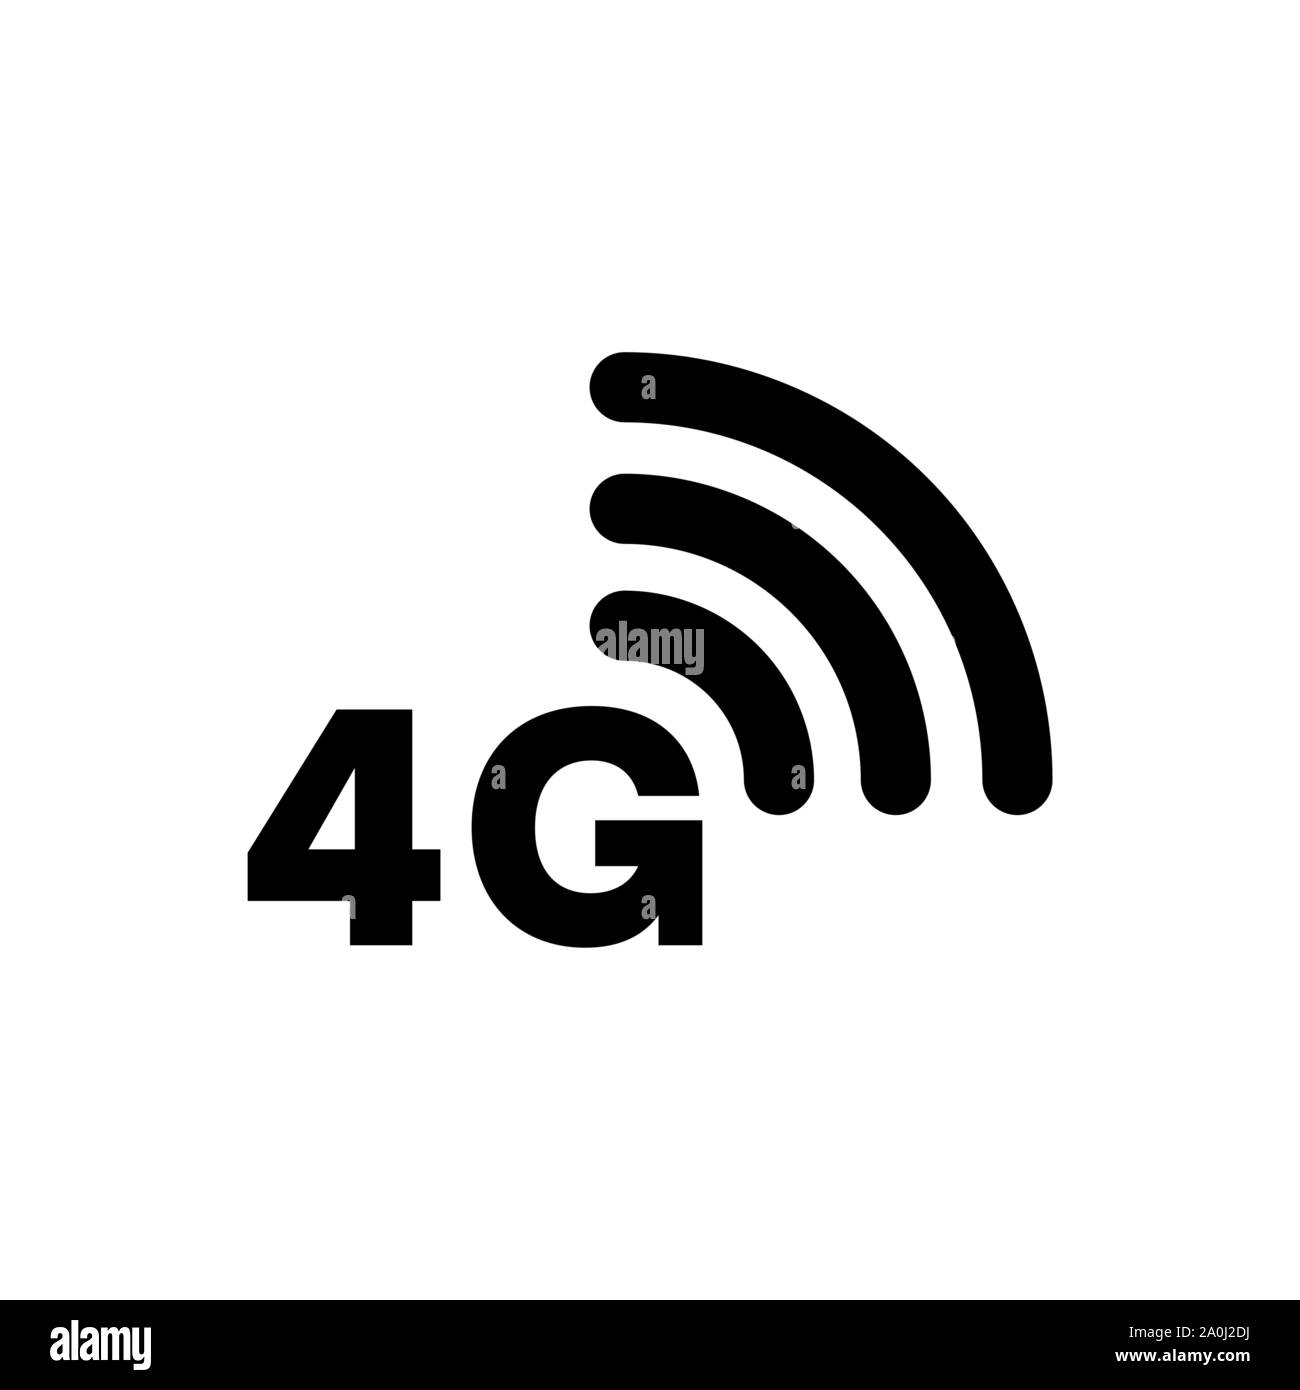 4g Network Logo Vector Illustration Stock Illustration - Download Image Now  - 4G, 5G, Antenna - Aerial - iStock